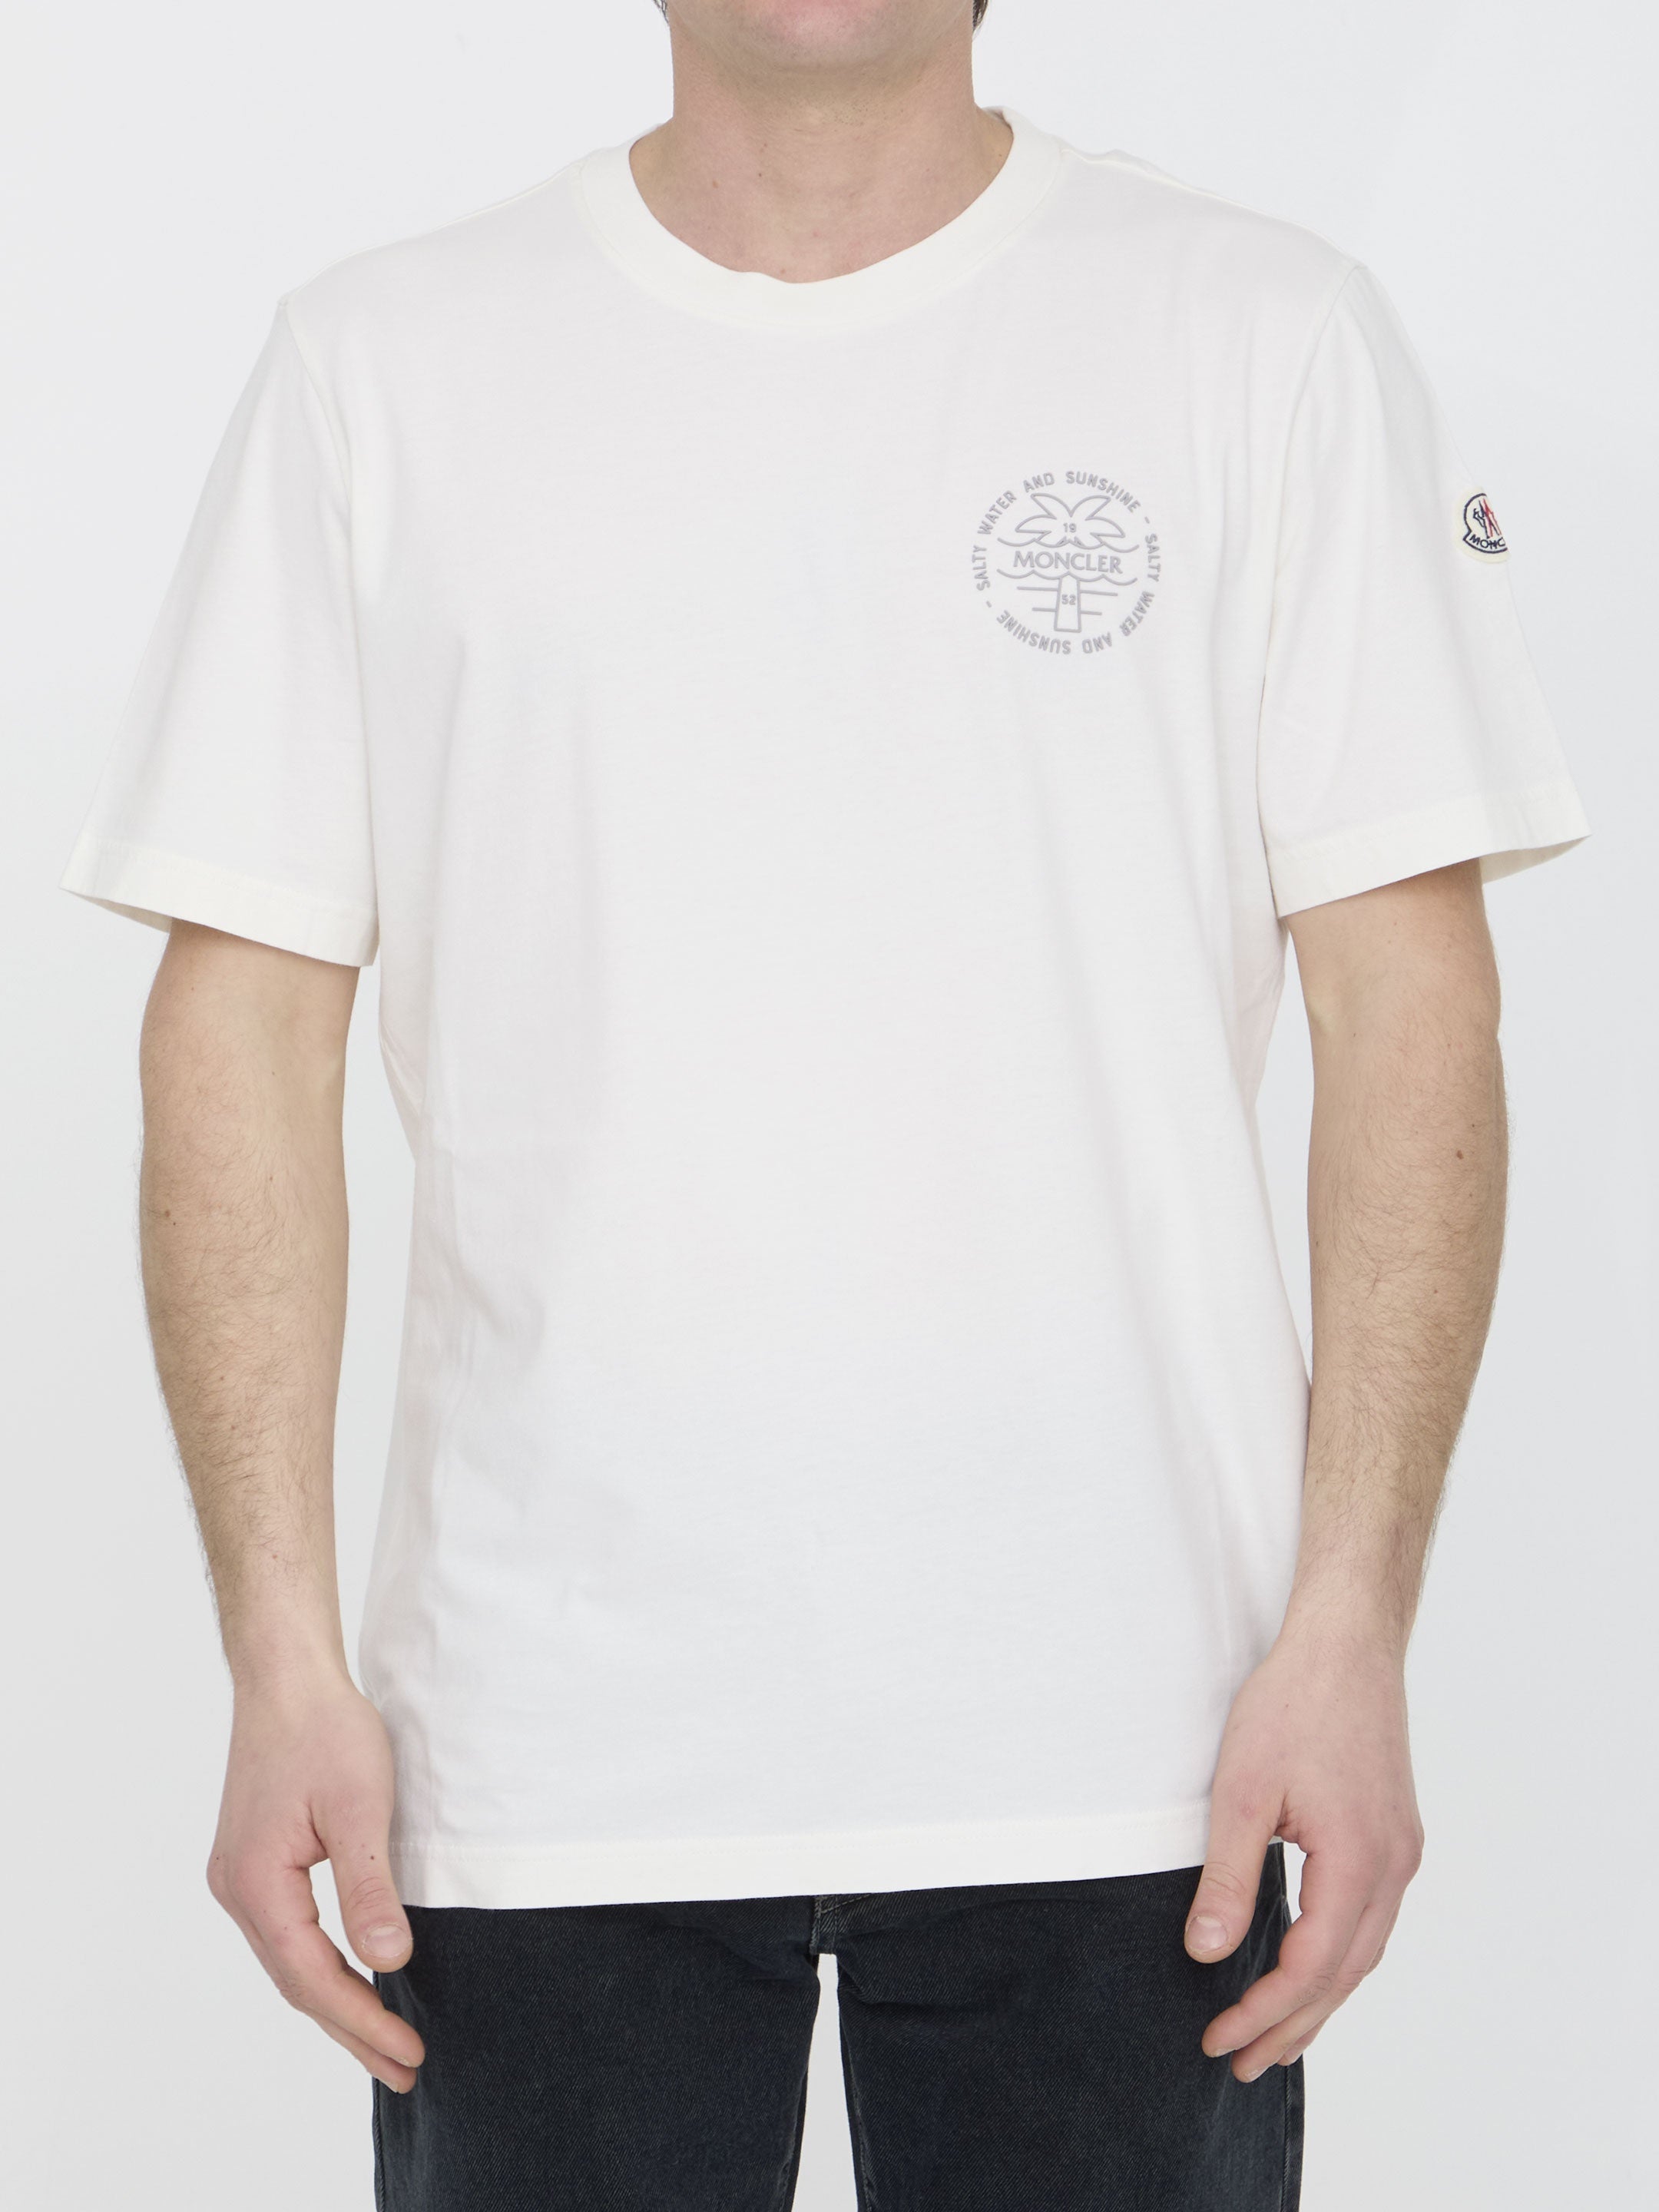 MONCLER-OUTLET-SALE-Cotton-t-shirt-Shirts-L-WHITE-ARCHIVE-COLLECTION.jpg